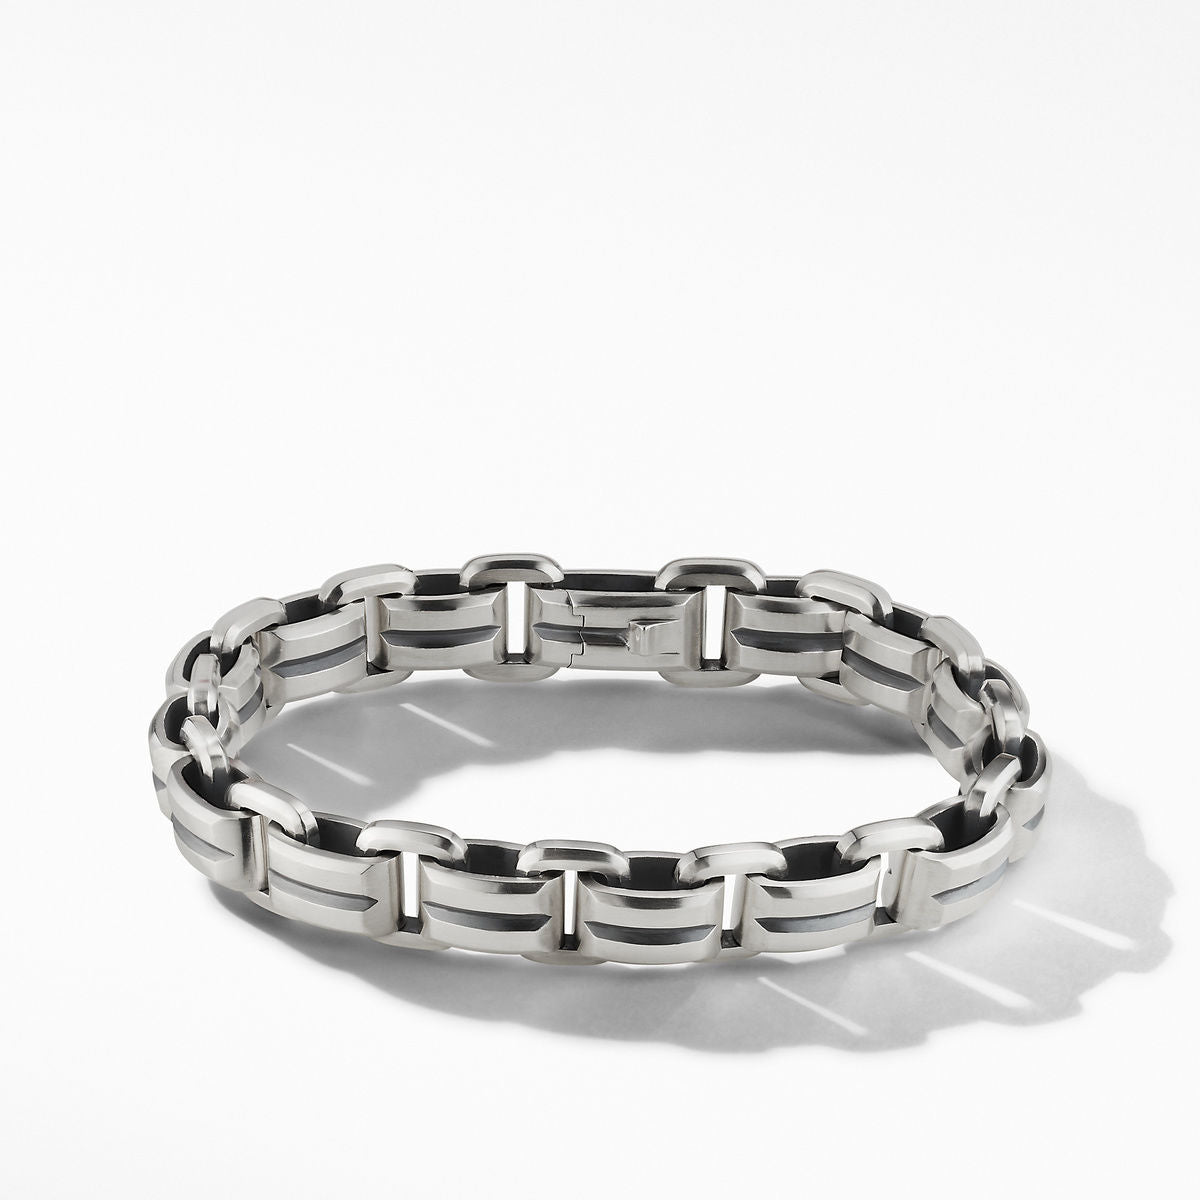 David Yurman Men's Streamline Cuff Bracelet - Sterling Silver - Size Medium